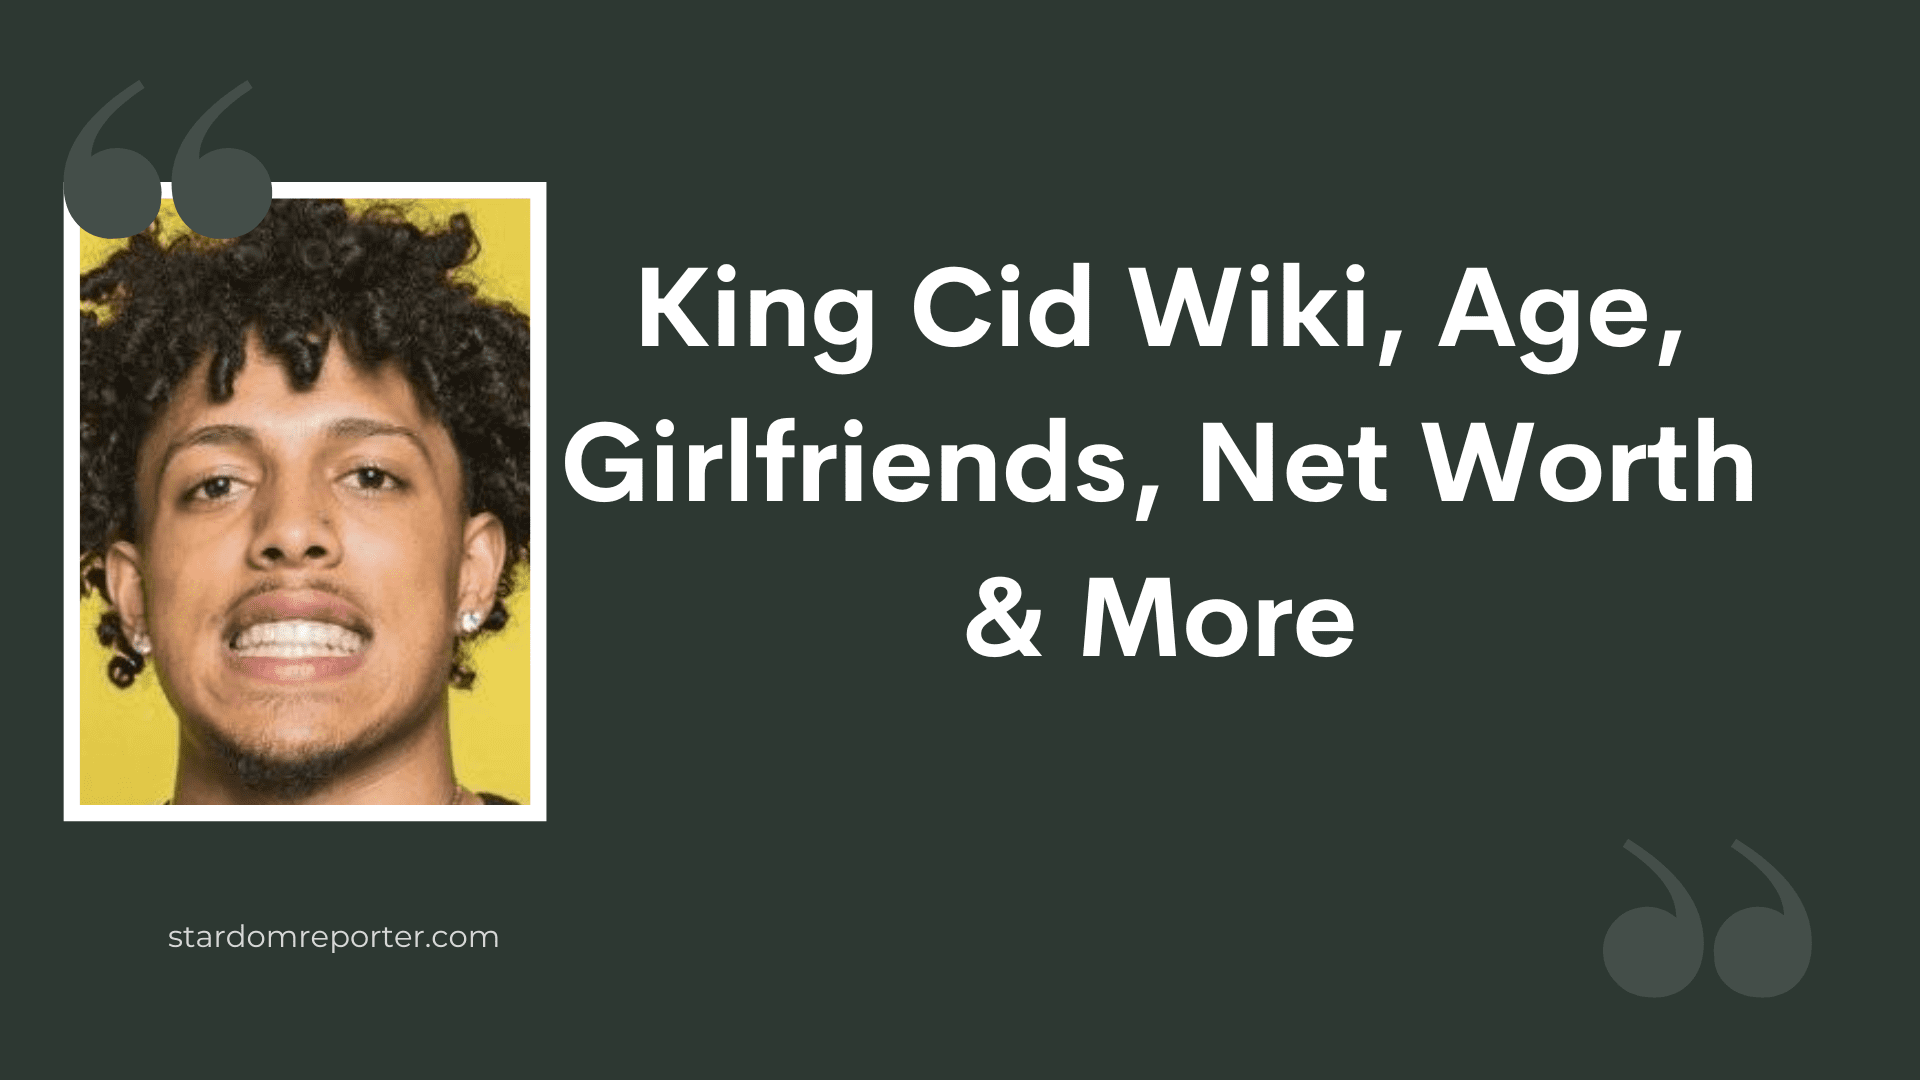 King Cid Wiki, Age, Bio, Girlfriends, Net Worth & More - 21